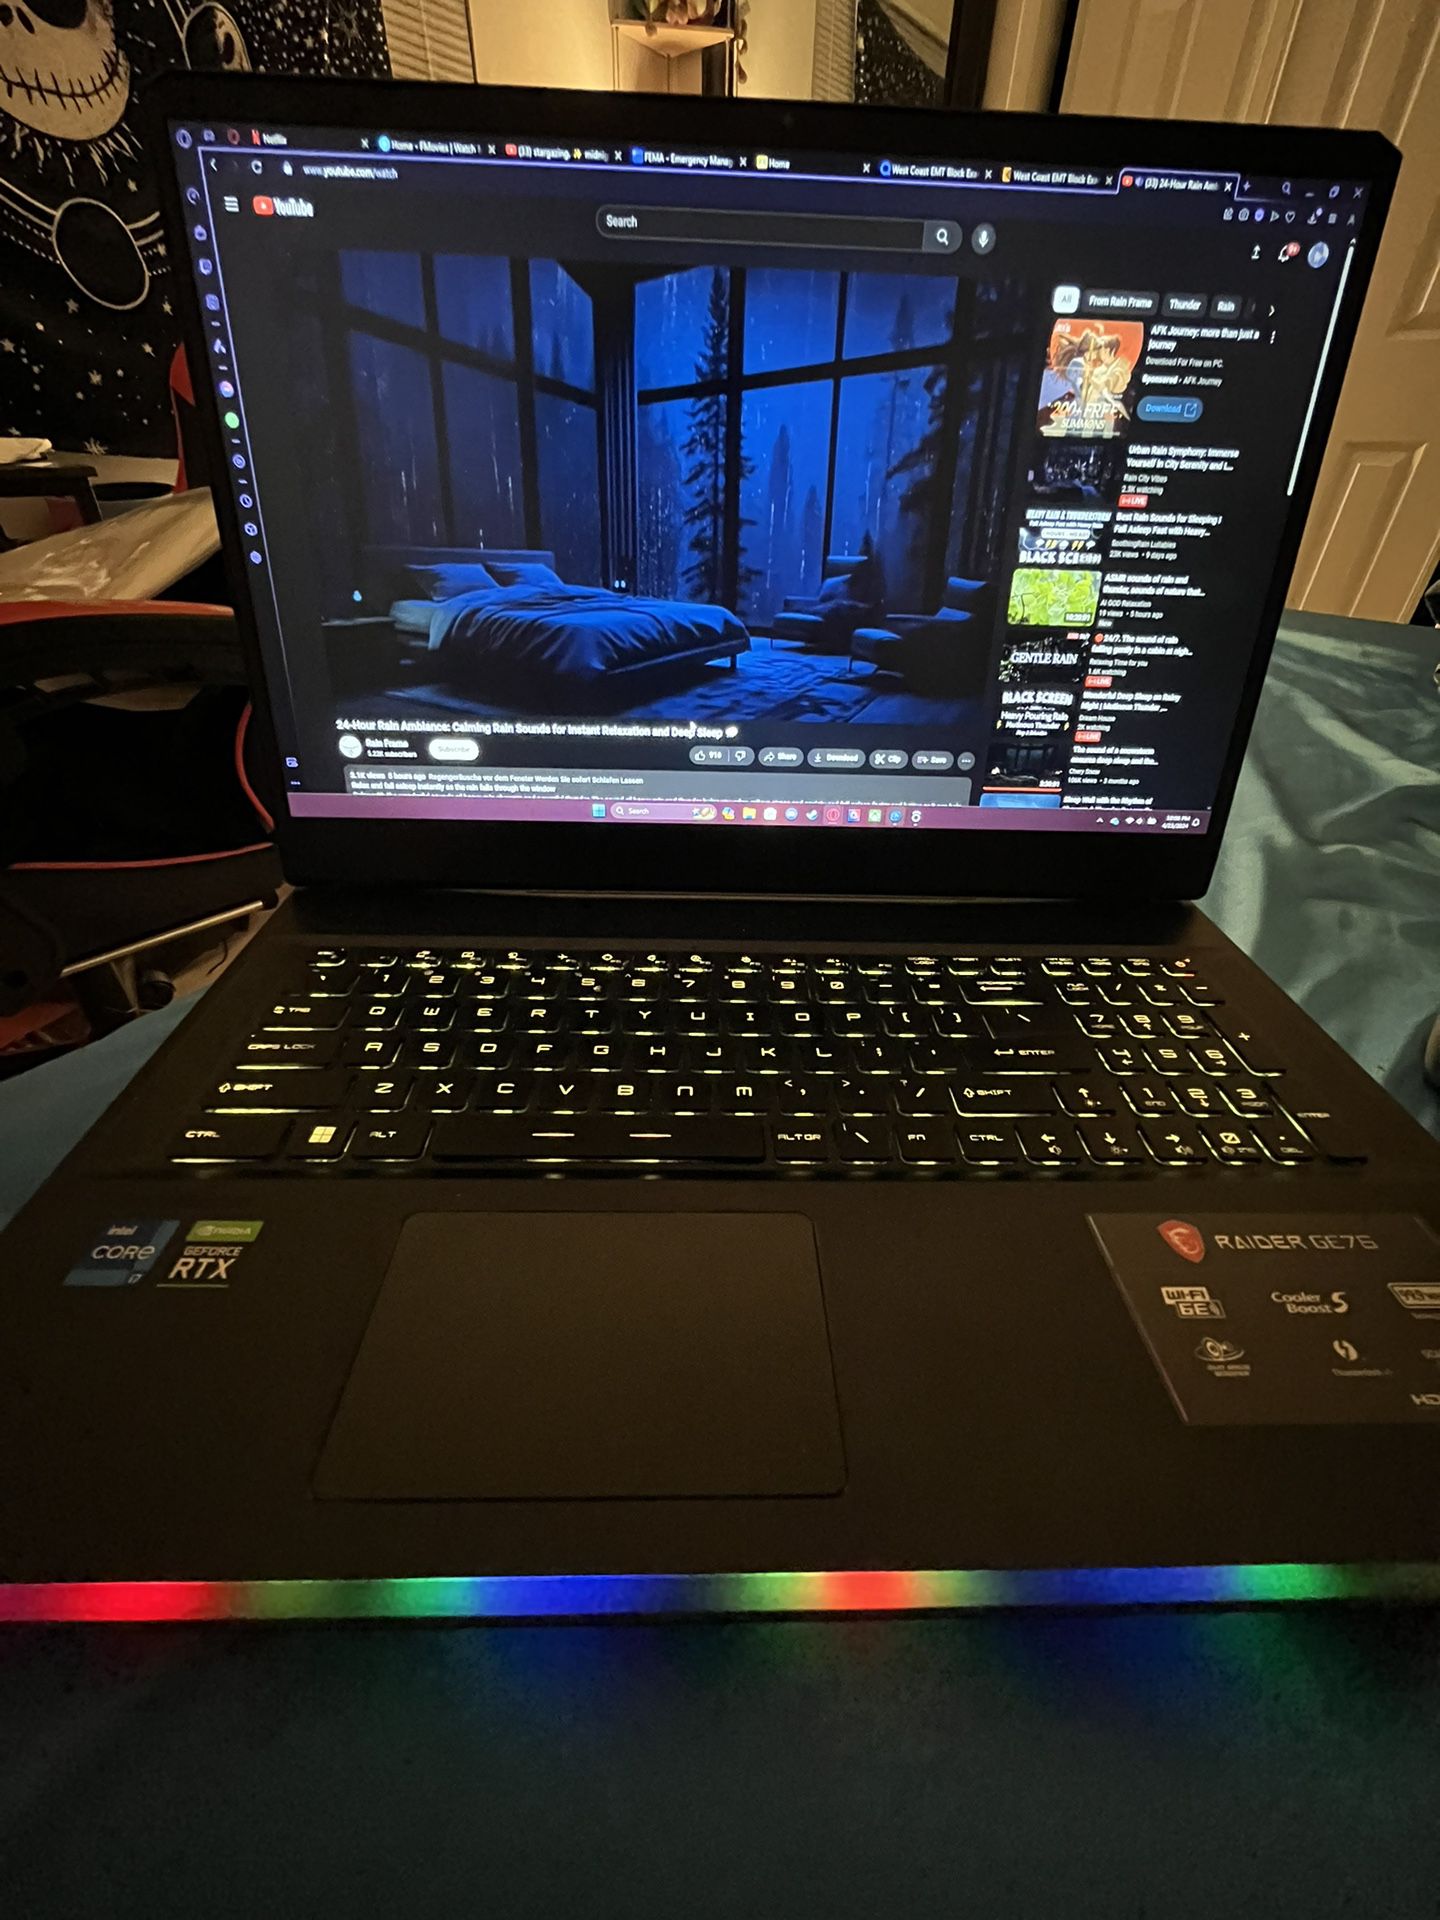 MSI Gaming Laptop I7-12700H, Nvidia 3060, 16GB ram, 1TB, 144hz display